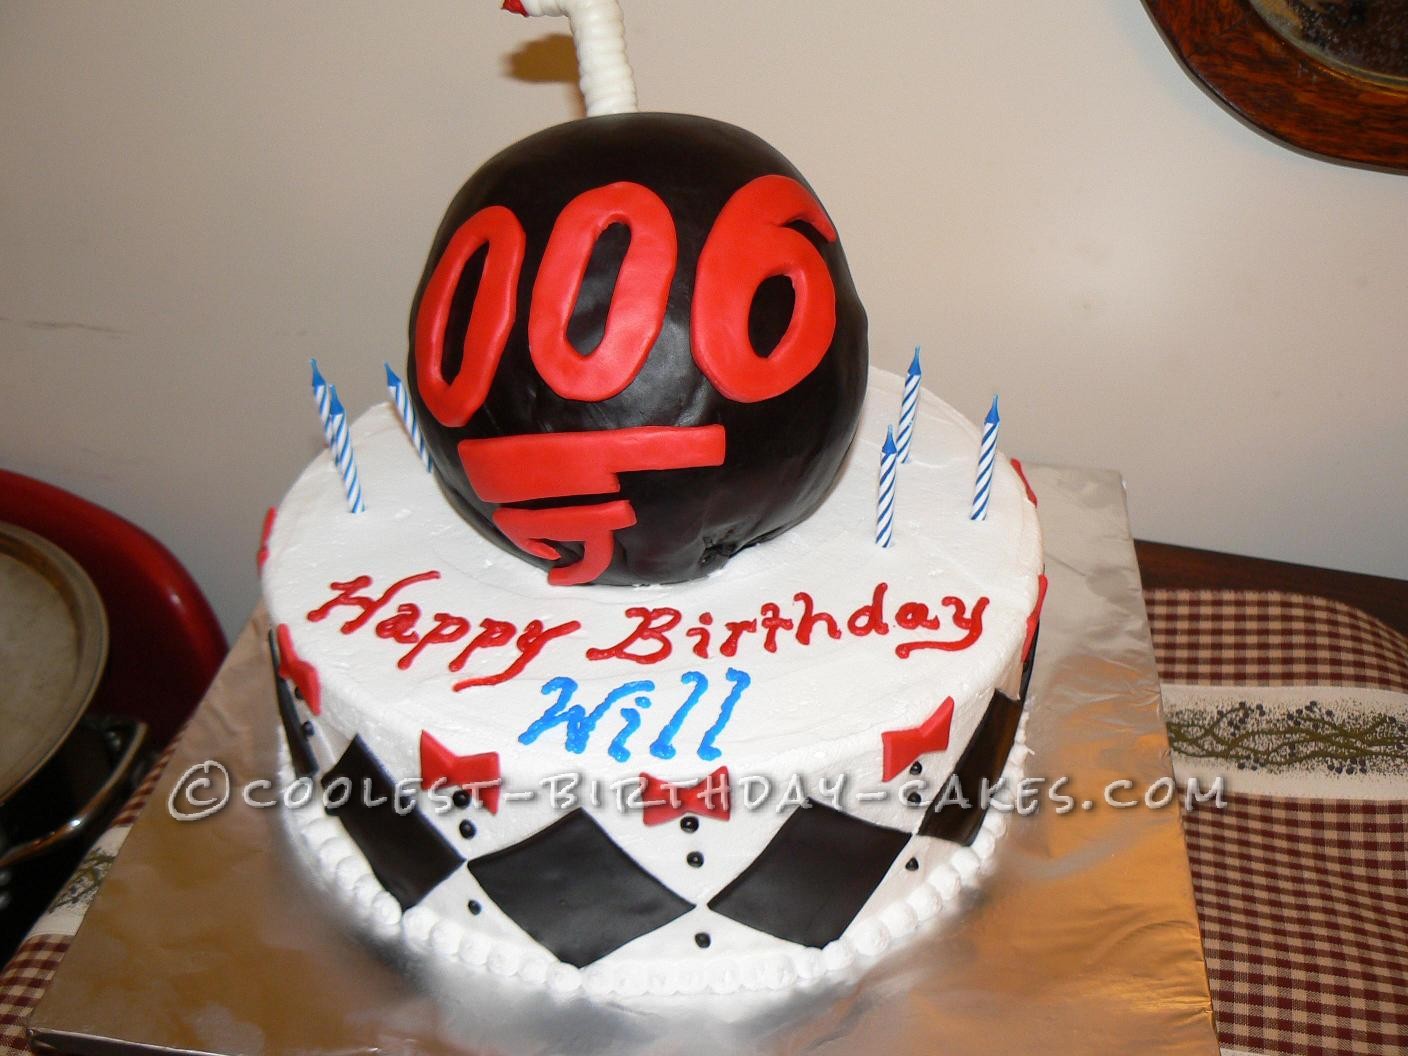 James Bond 006 6th Birthday Cake